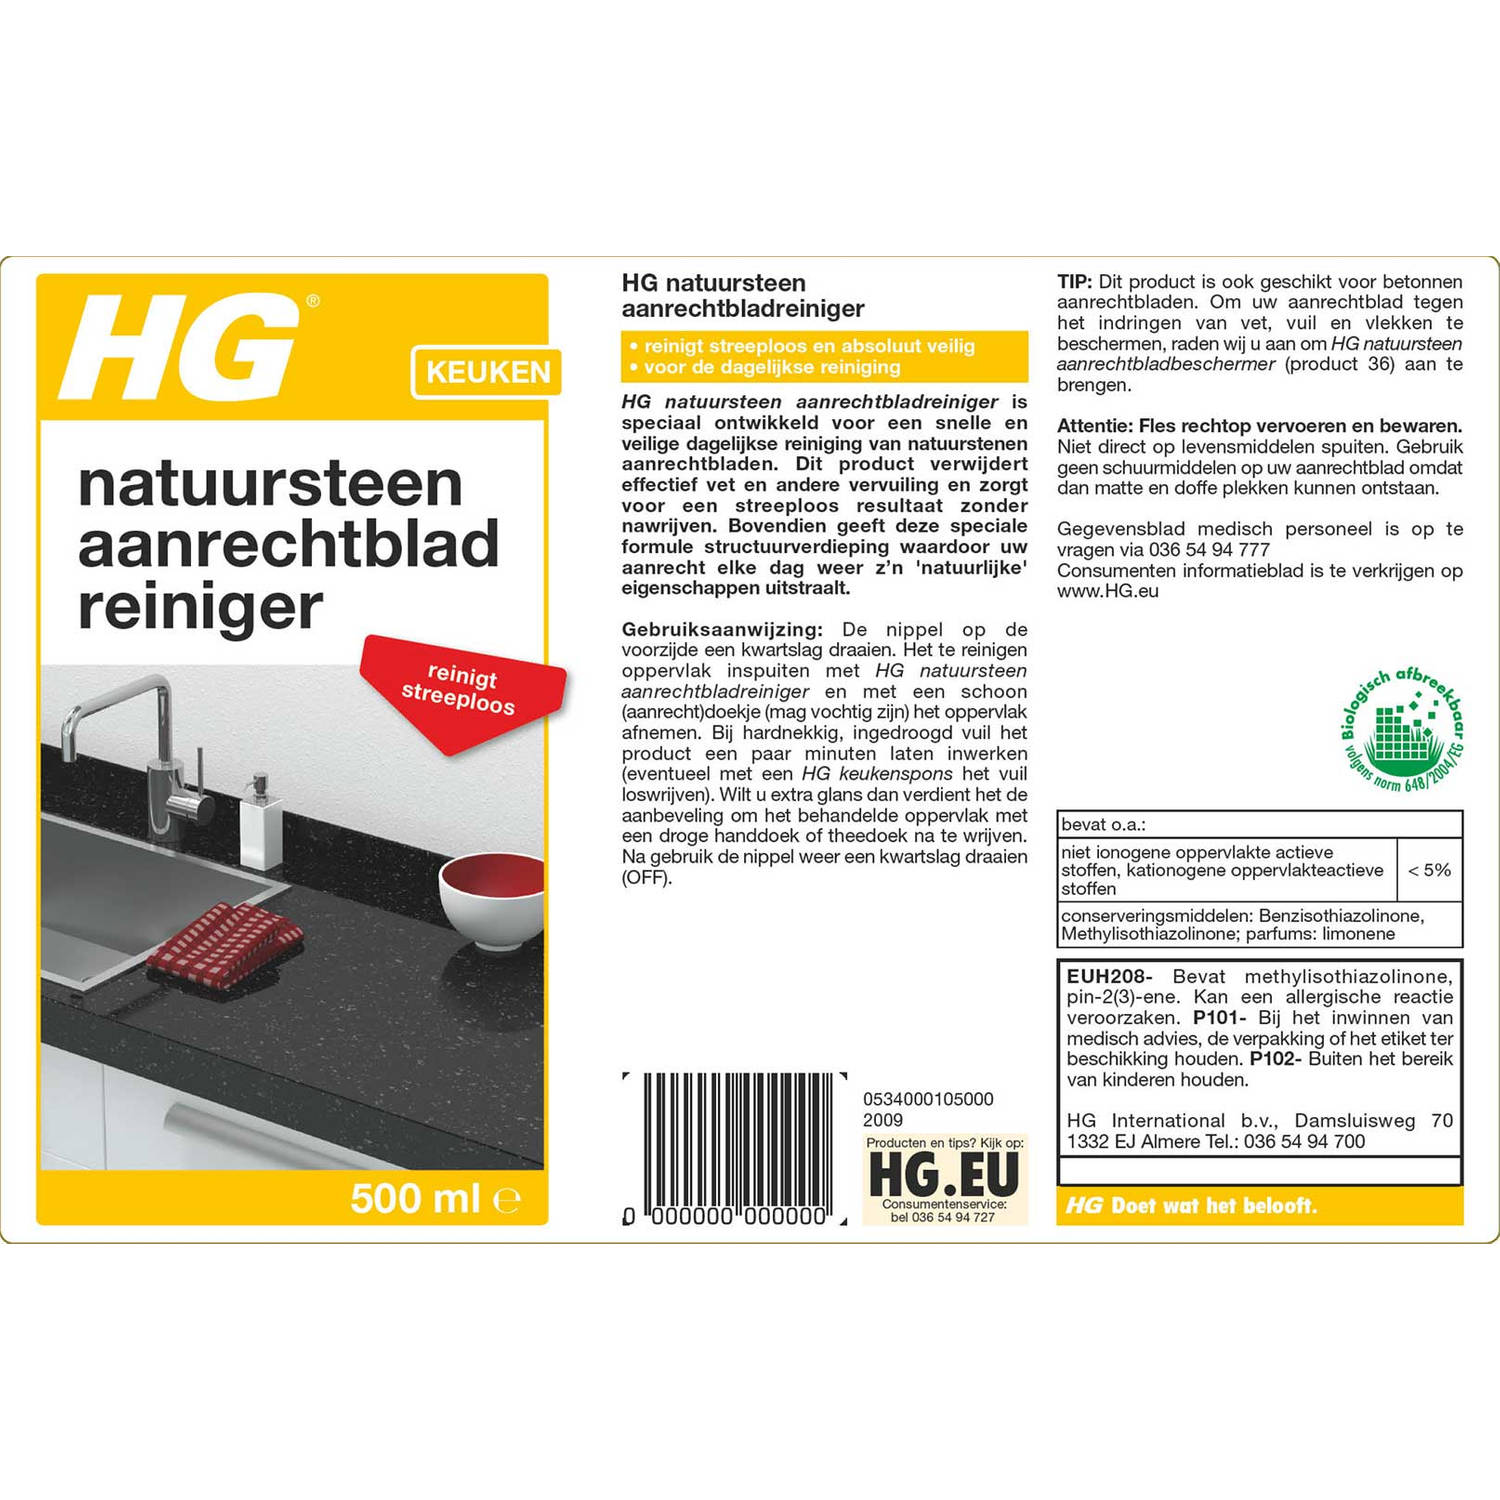 Bourgondië annuleren Trouw HG natuursteen aanrechtbladreiniger 500 ml | Blokker